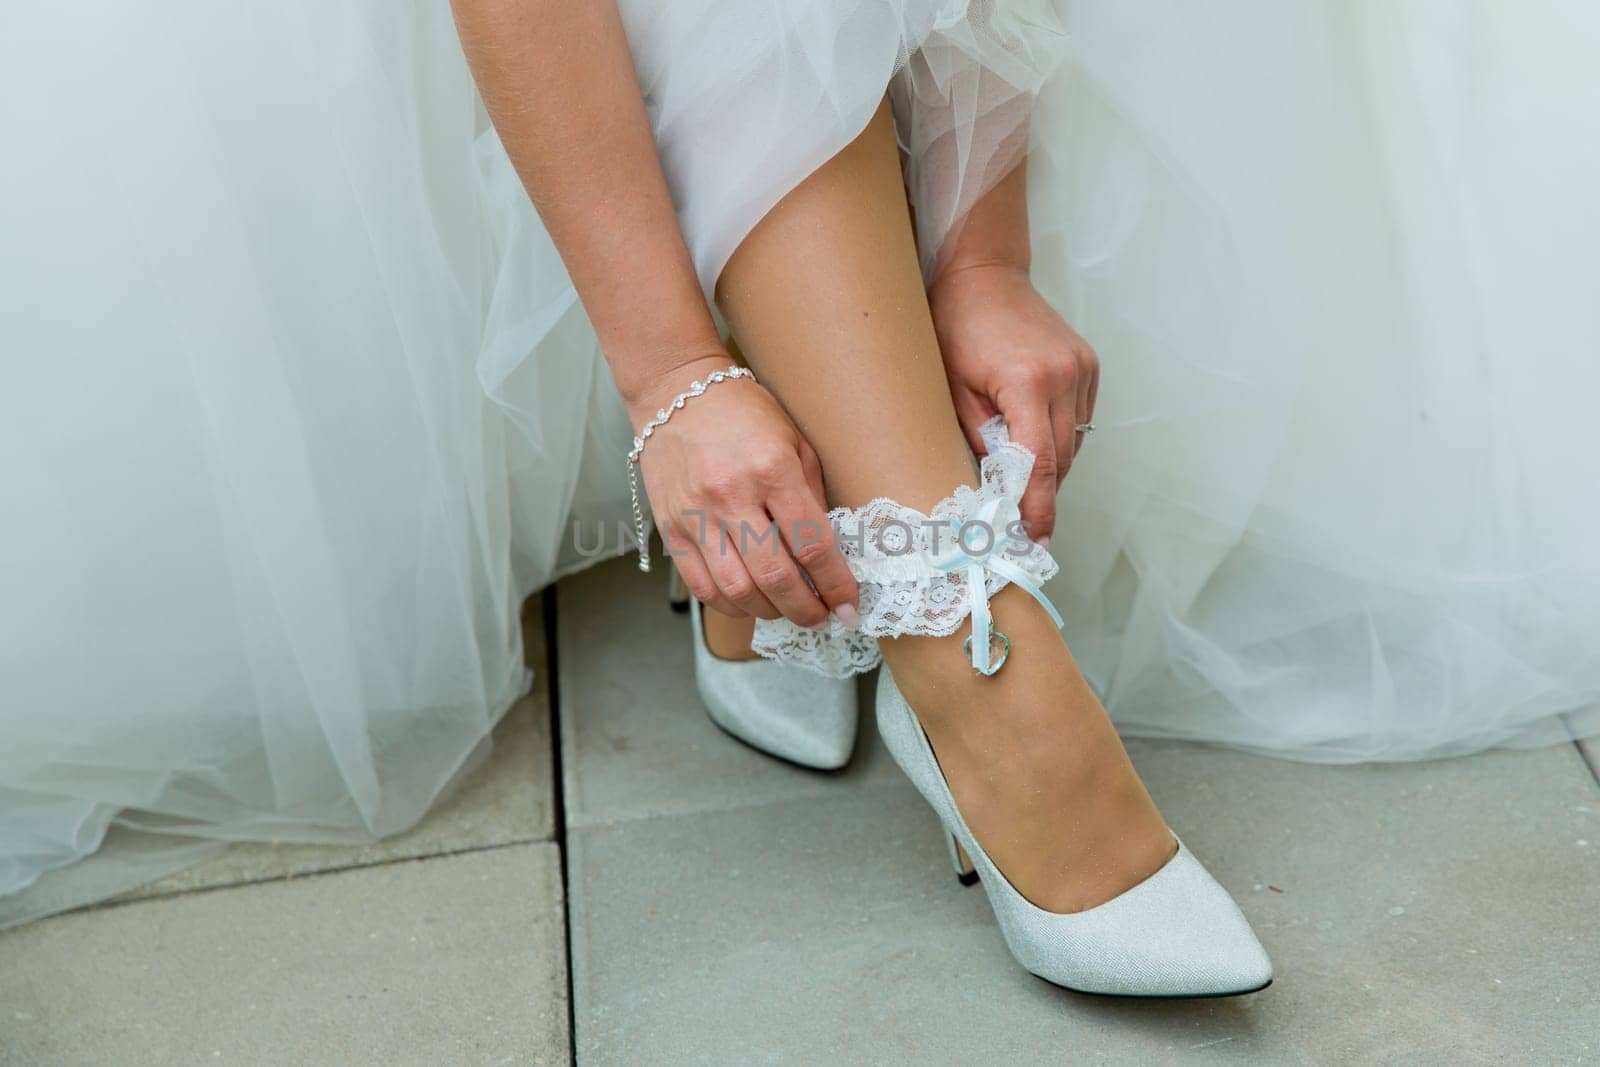 The bride adjusts the garter on her leg.